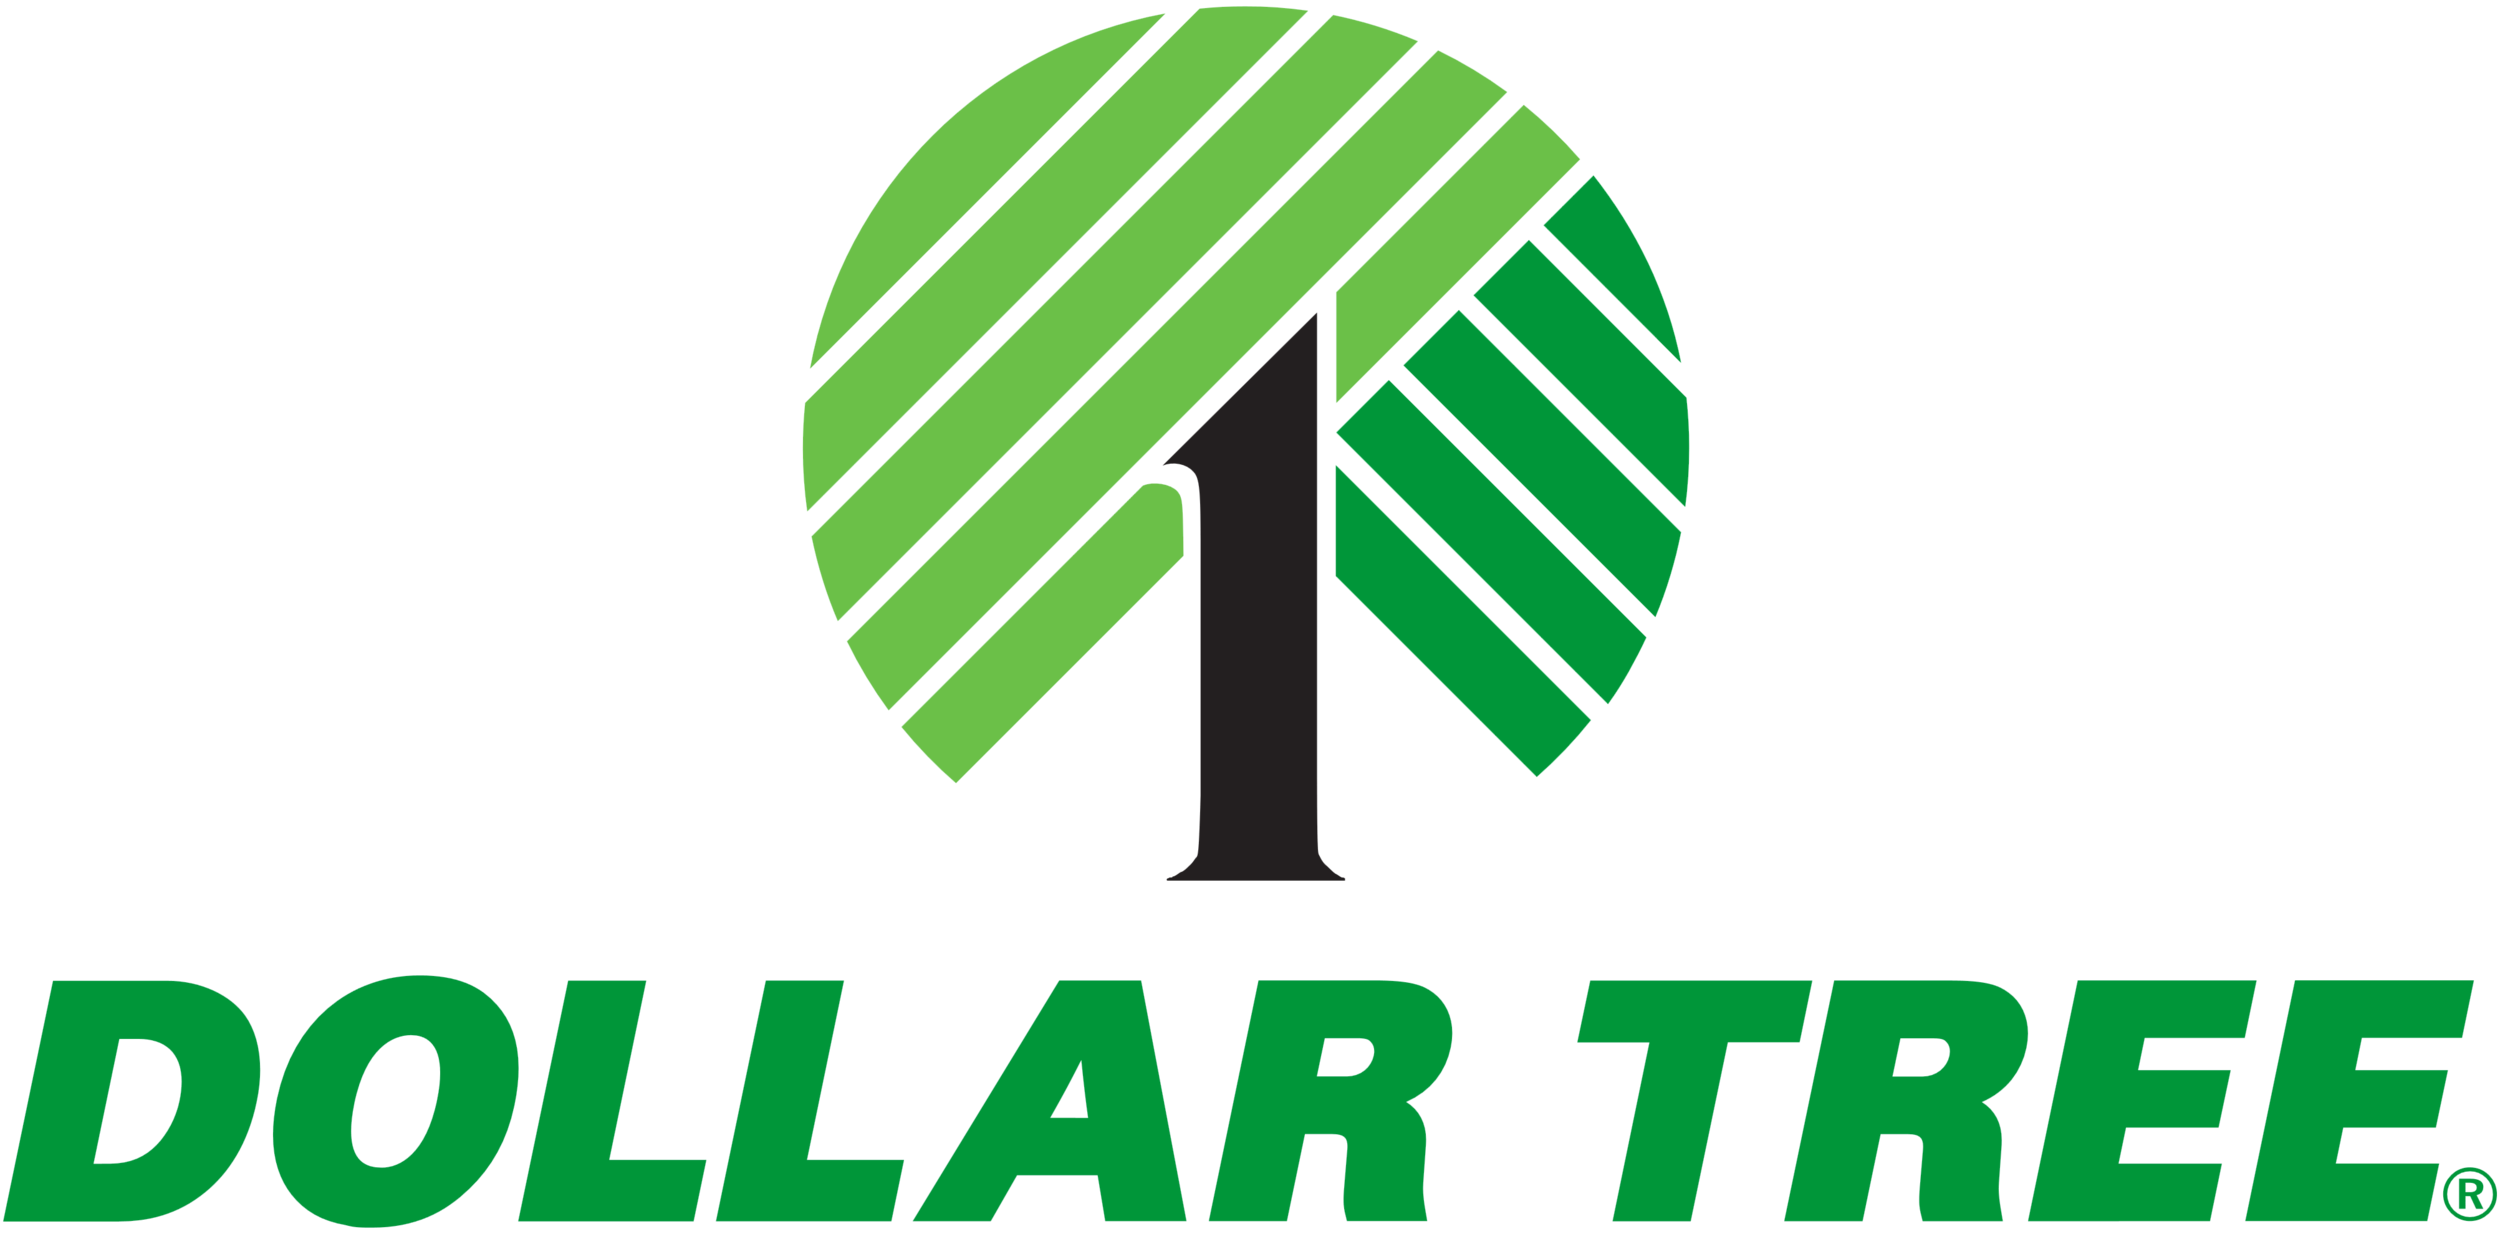 Dollar_Tree_logo_symbol.png